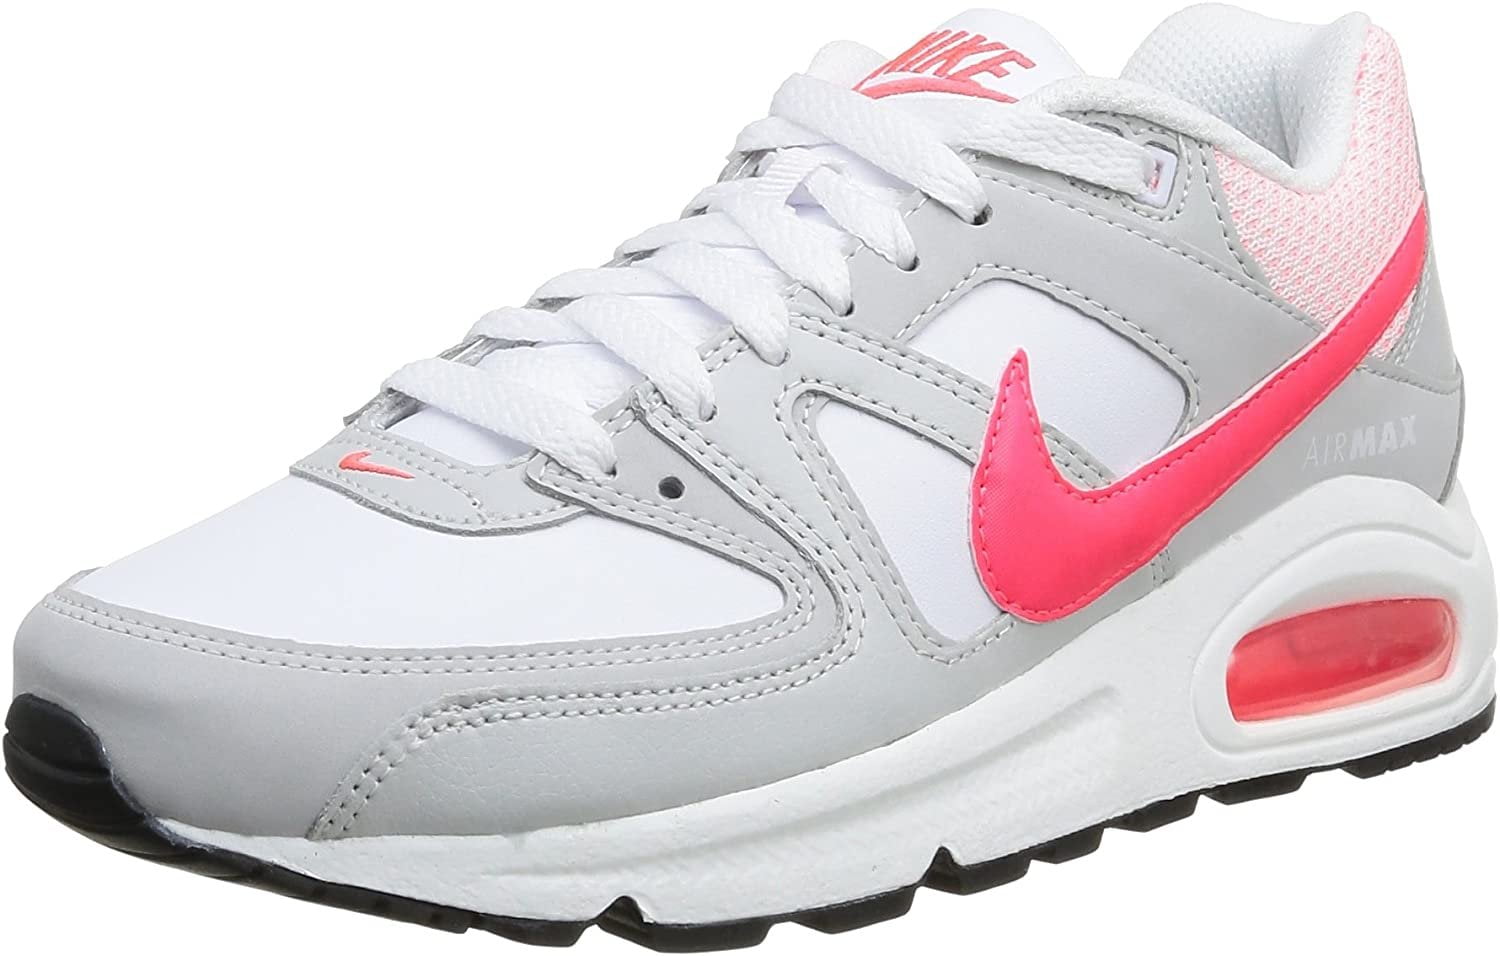 Nike Womens Max Command Running Trainers 397690 Sneakers Shoes UK 4.5 US 7 EU 38, White Hyper Punch - Walmart.com